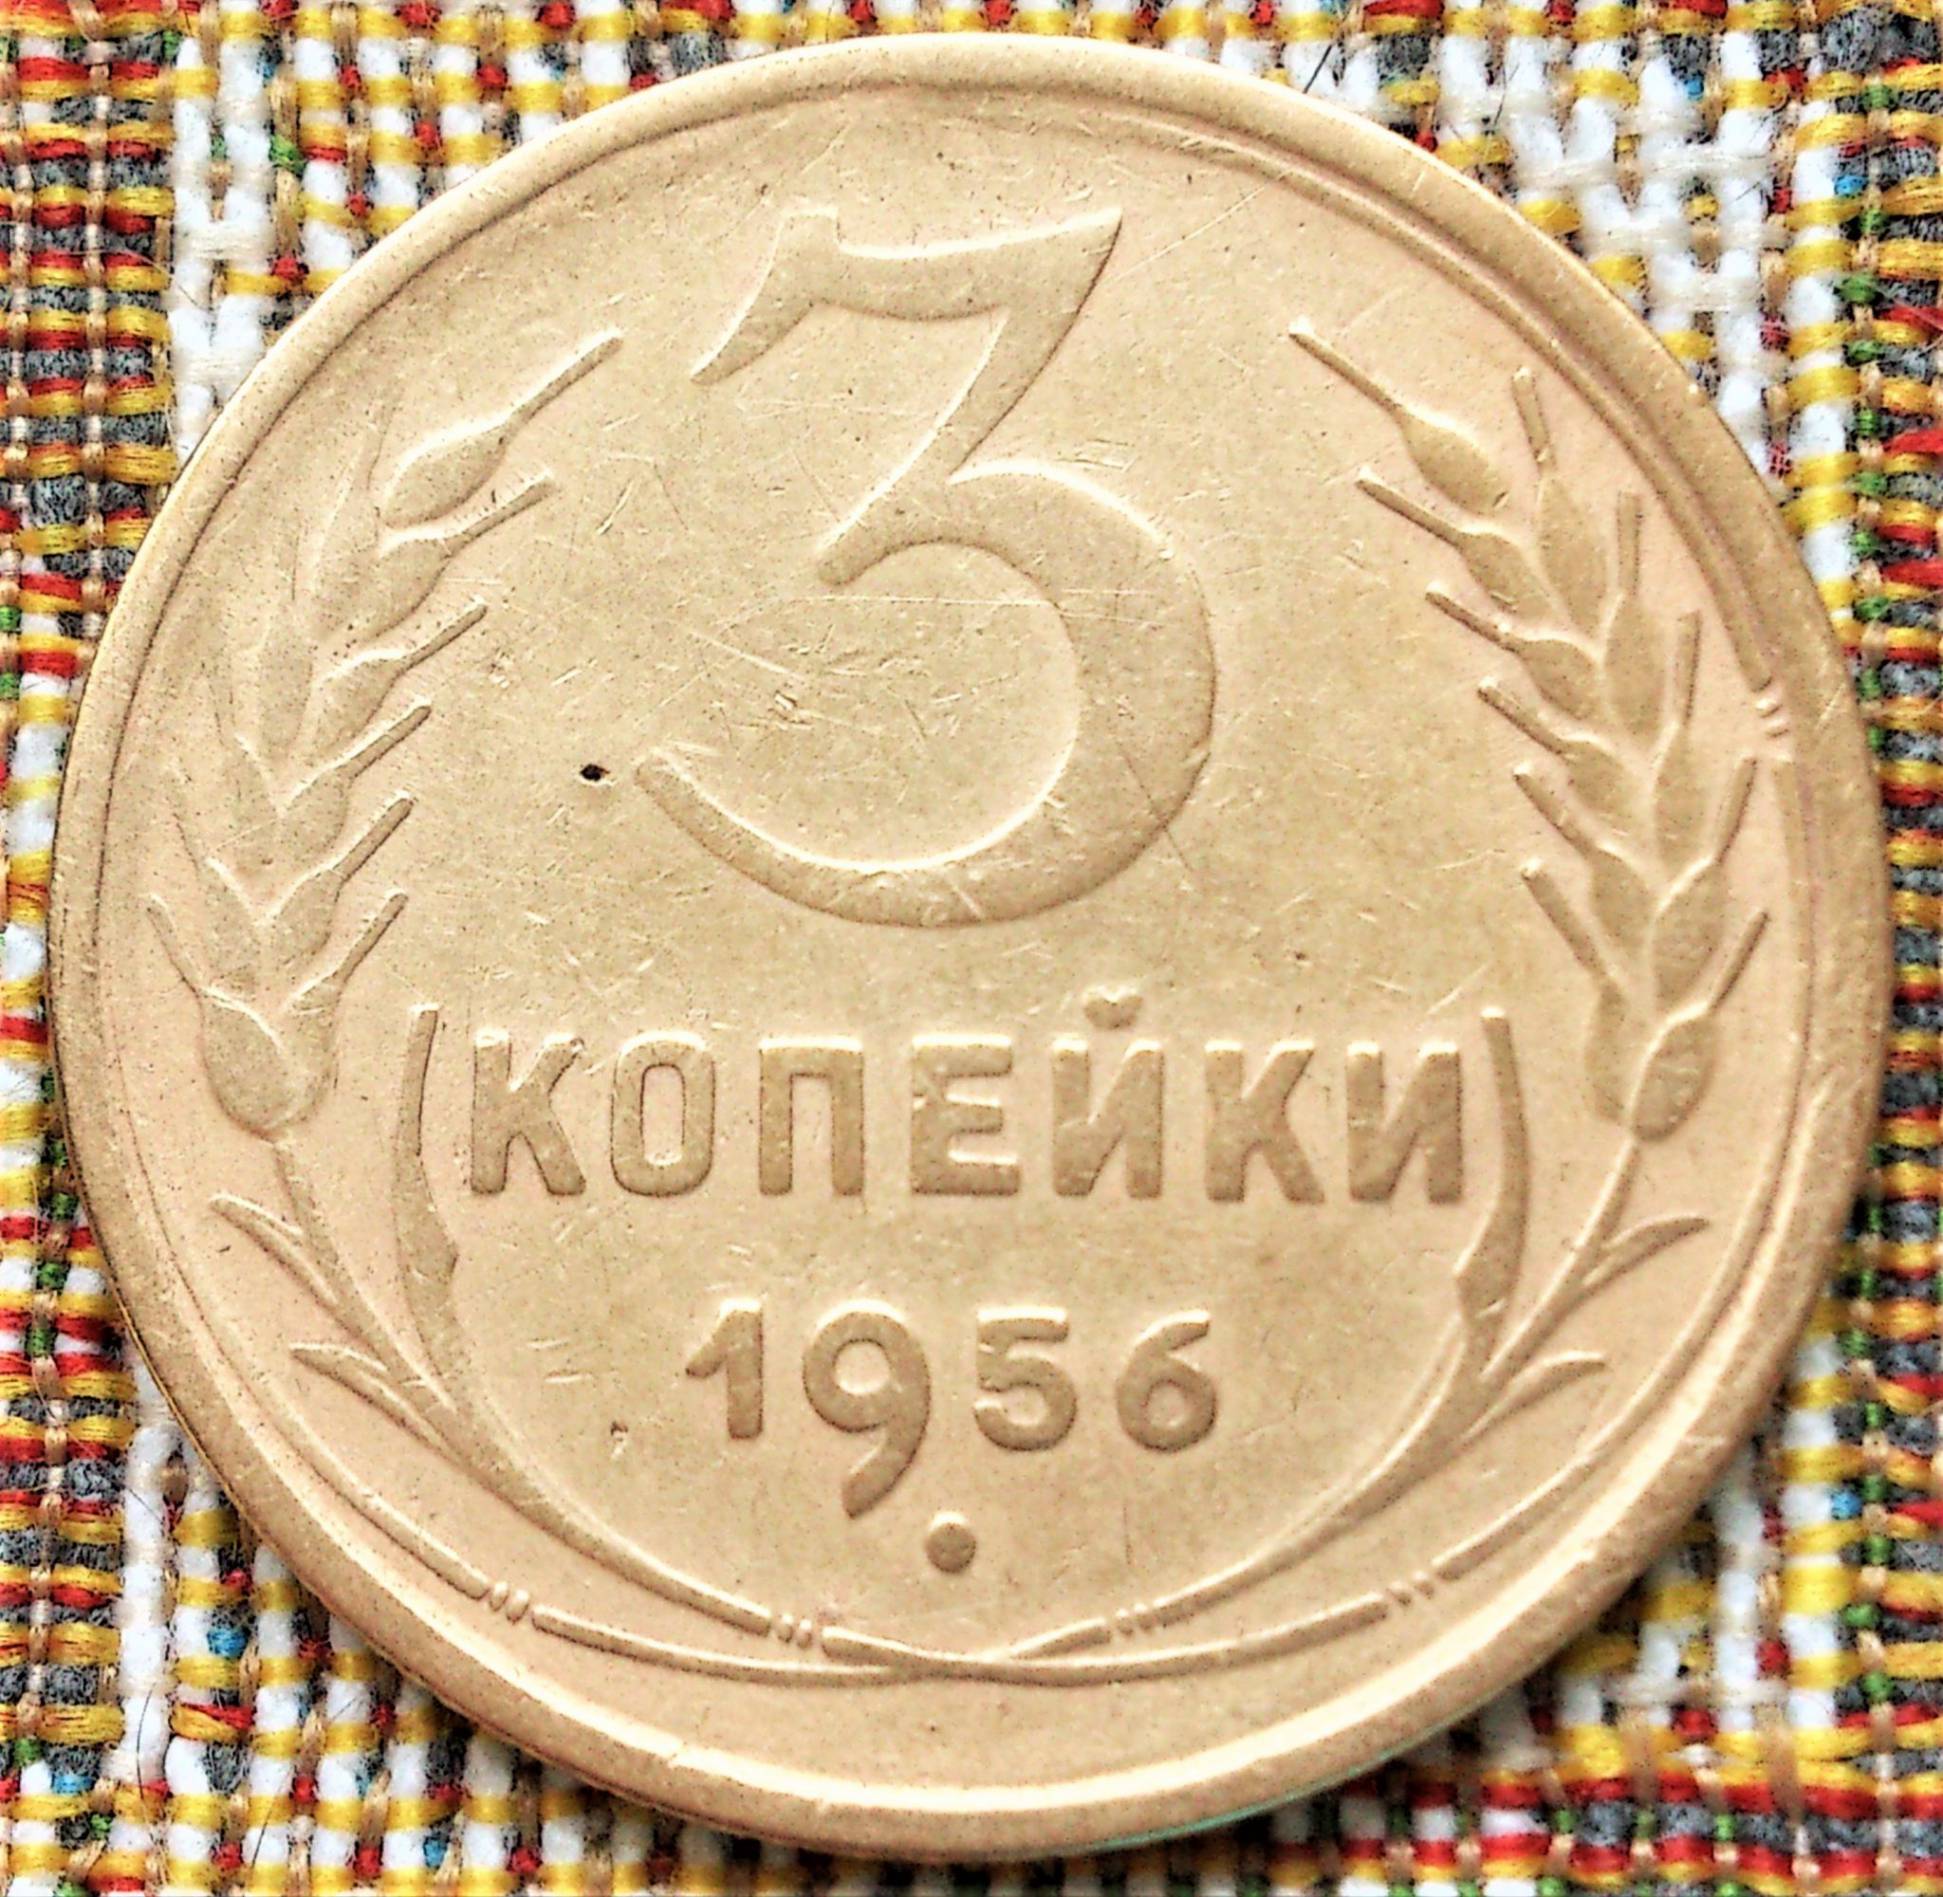 1956 год монеты цена. Монеты 1956г 3 копейки. 3 Копейки 1956 года. СССР 3 копейки 1956. 3 Копейки СССР погодовка.